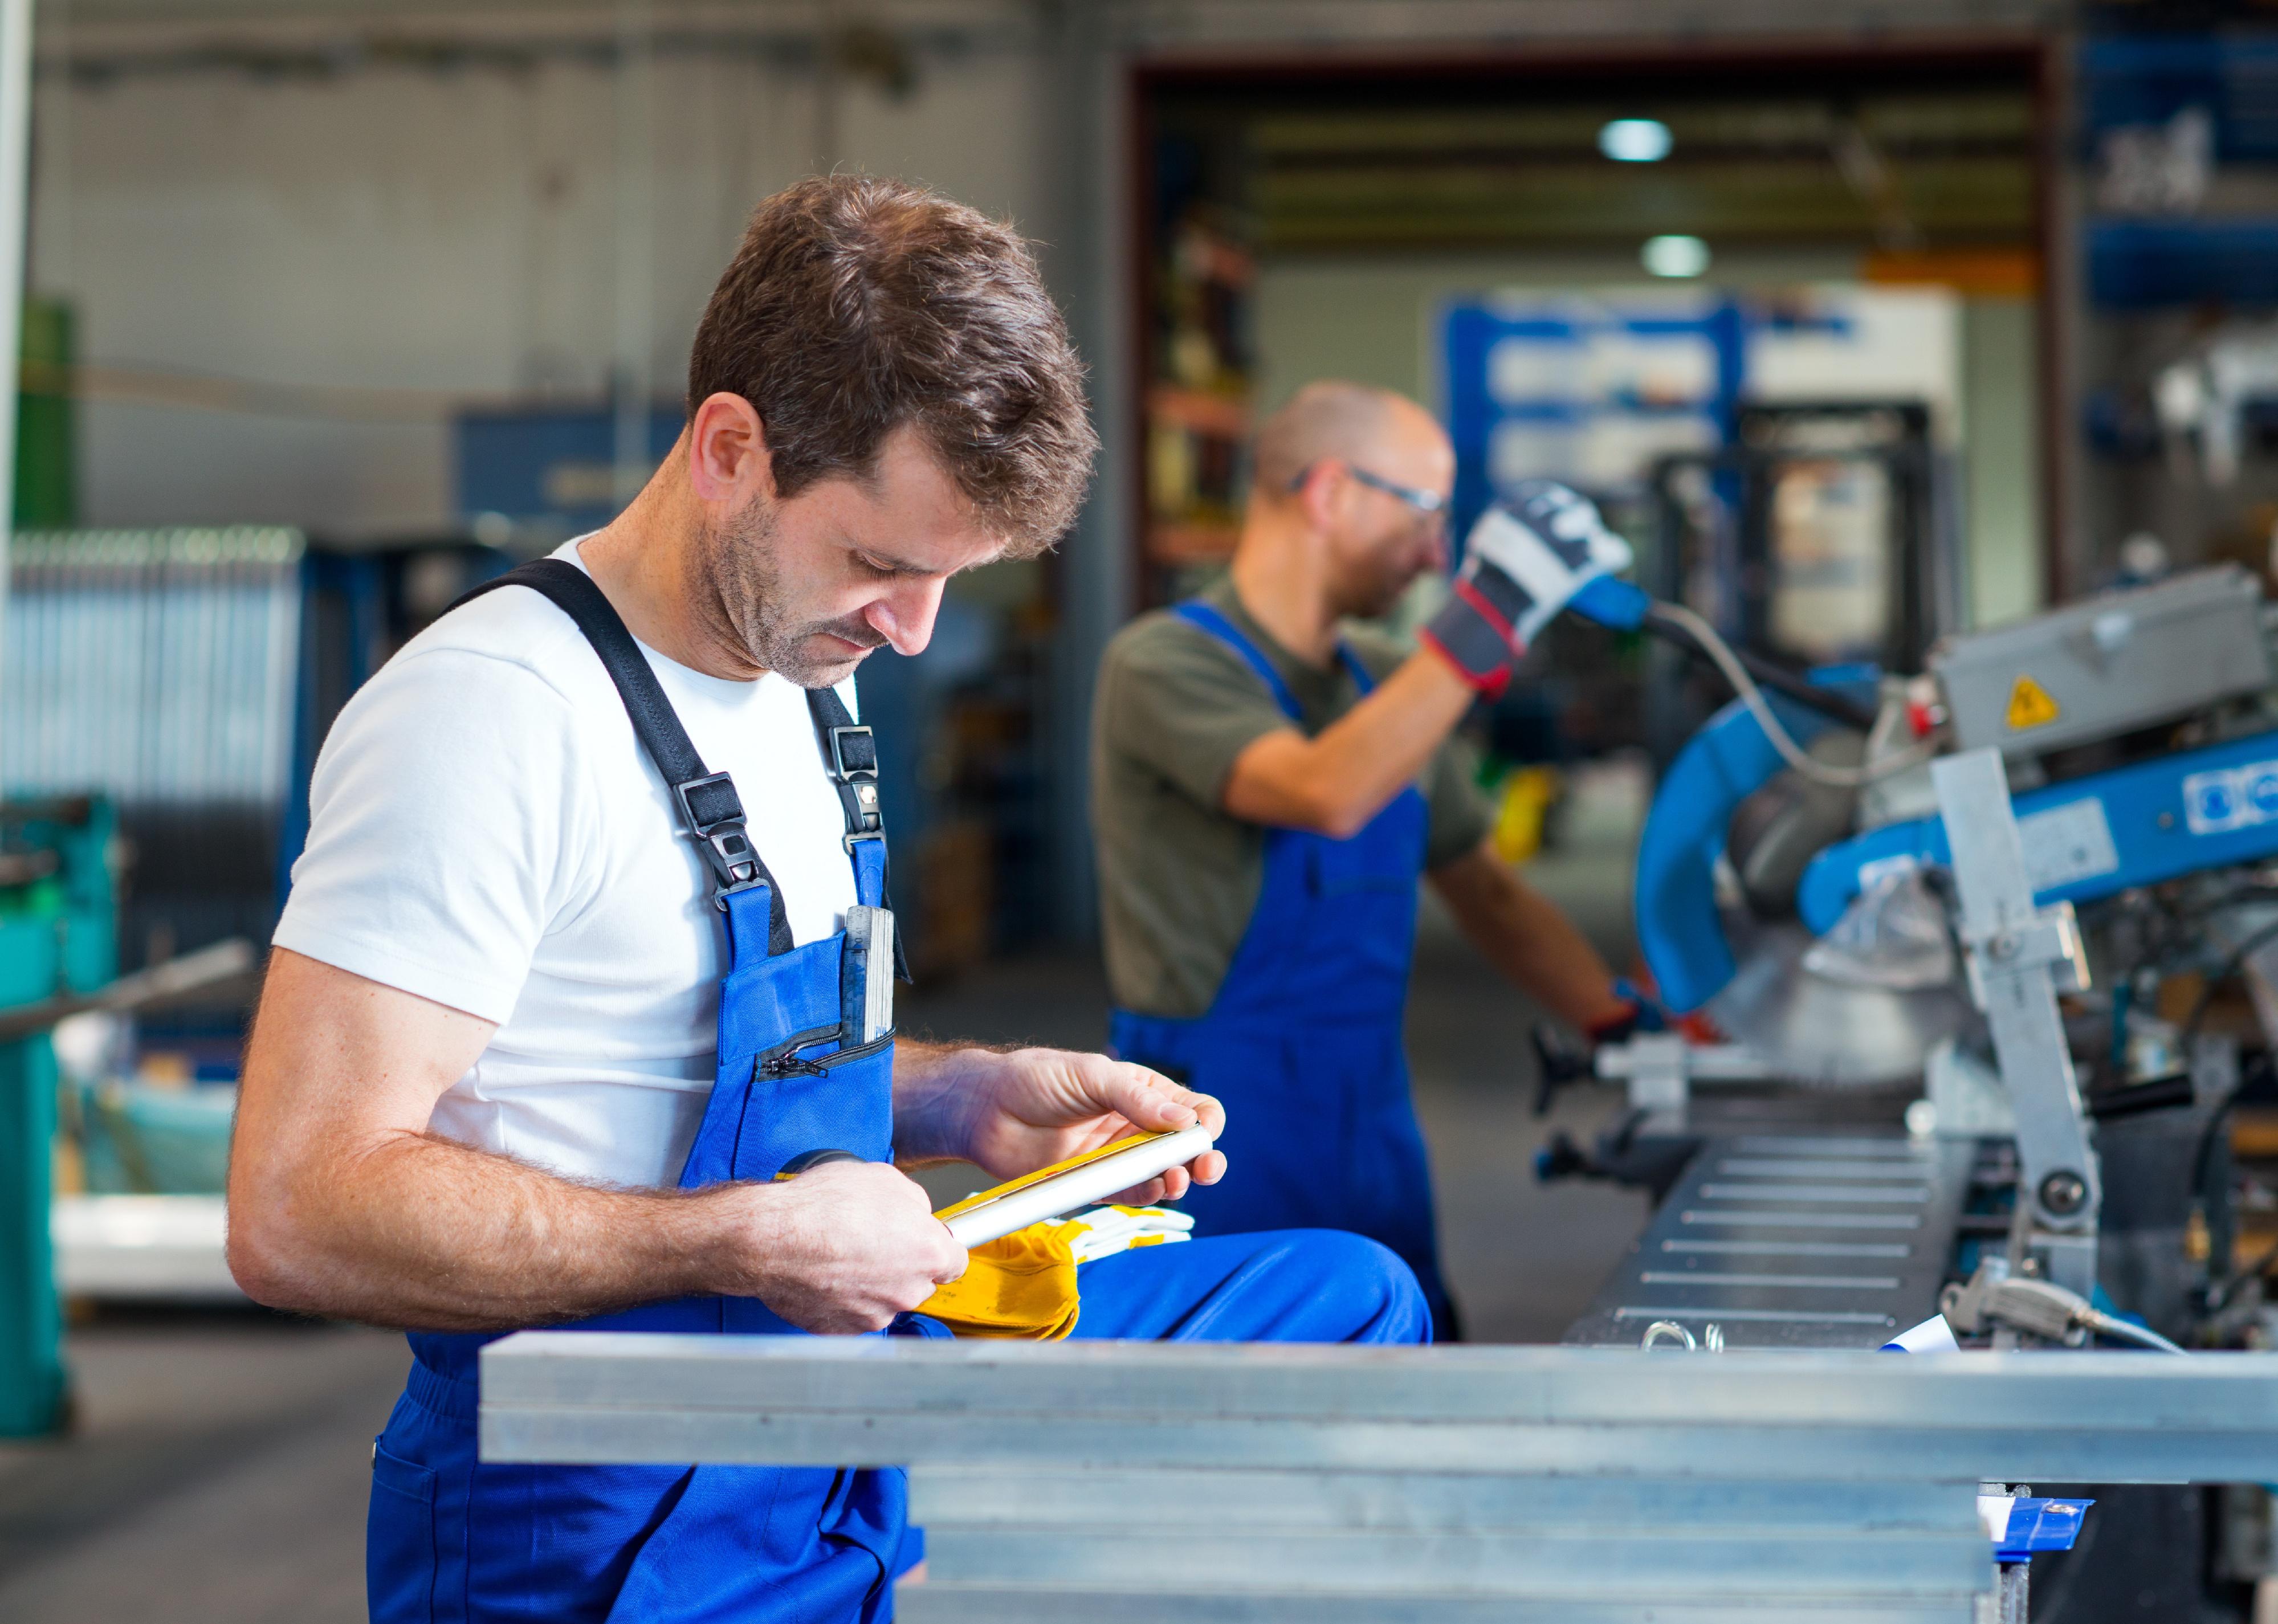 Men working on manufacturing equipment.